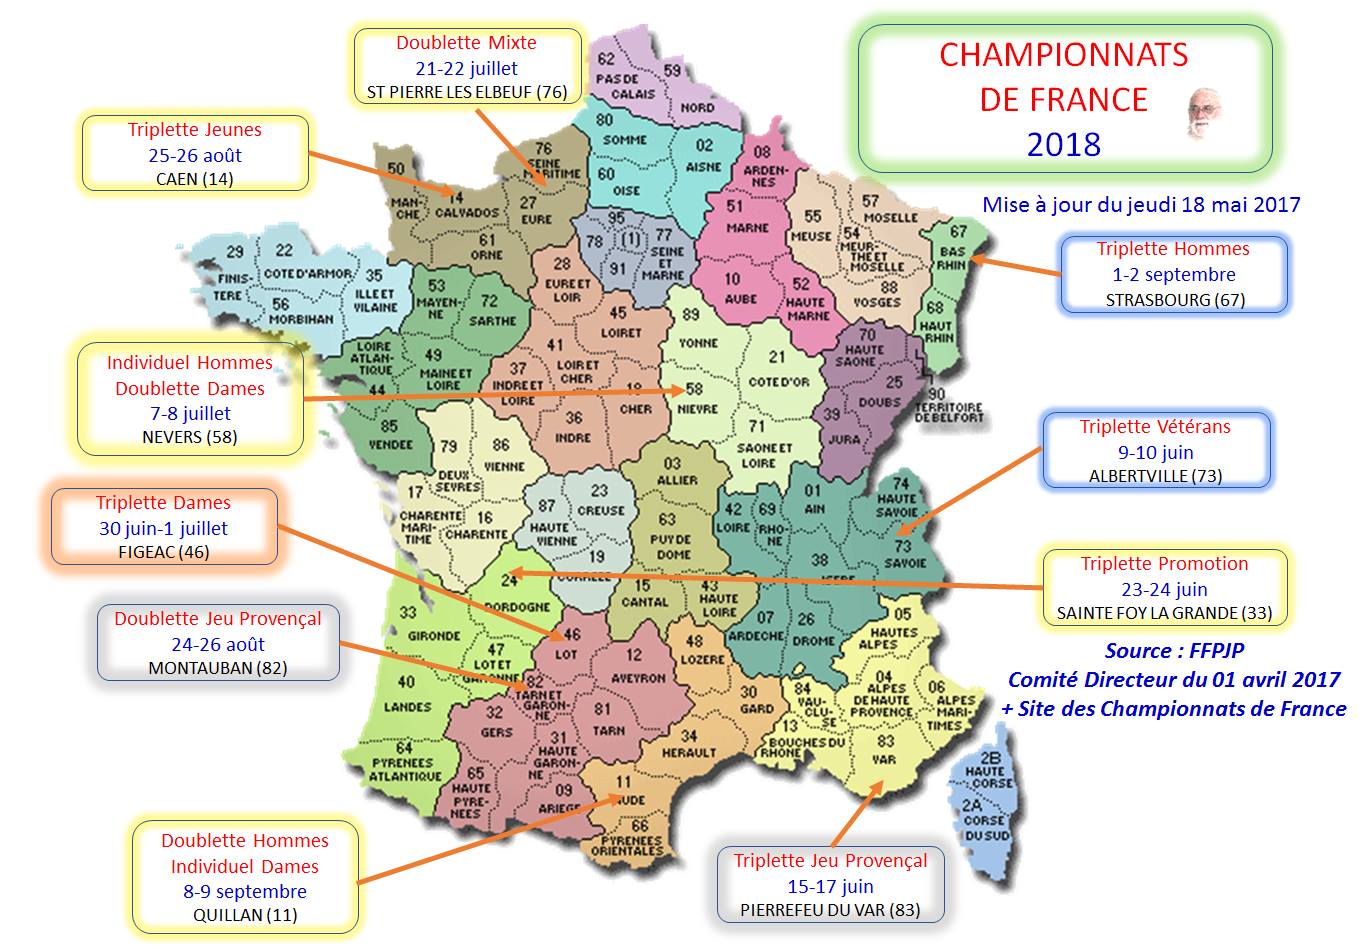                                     LES CHAMPIONNATS DE FRANCE 2018